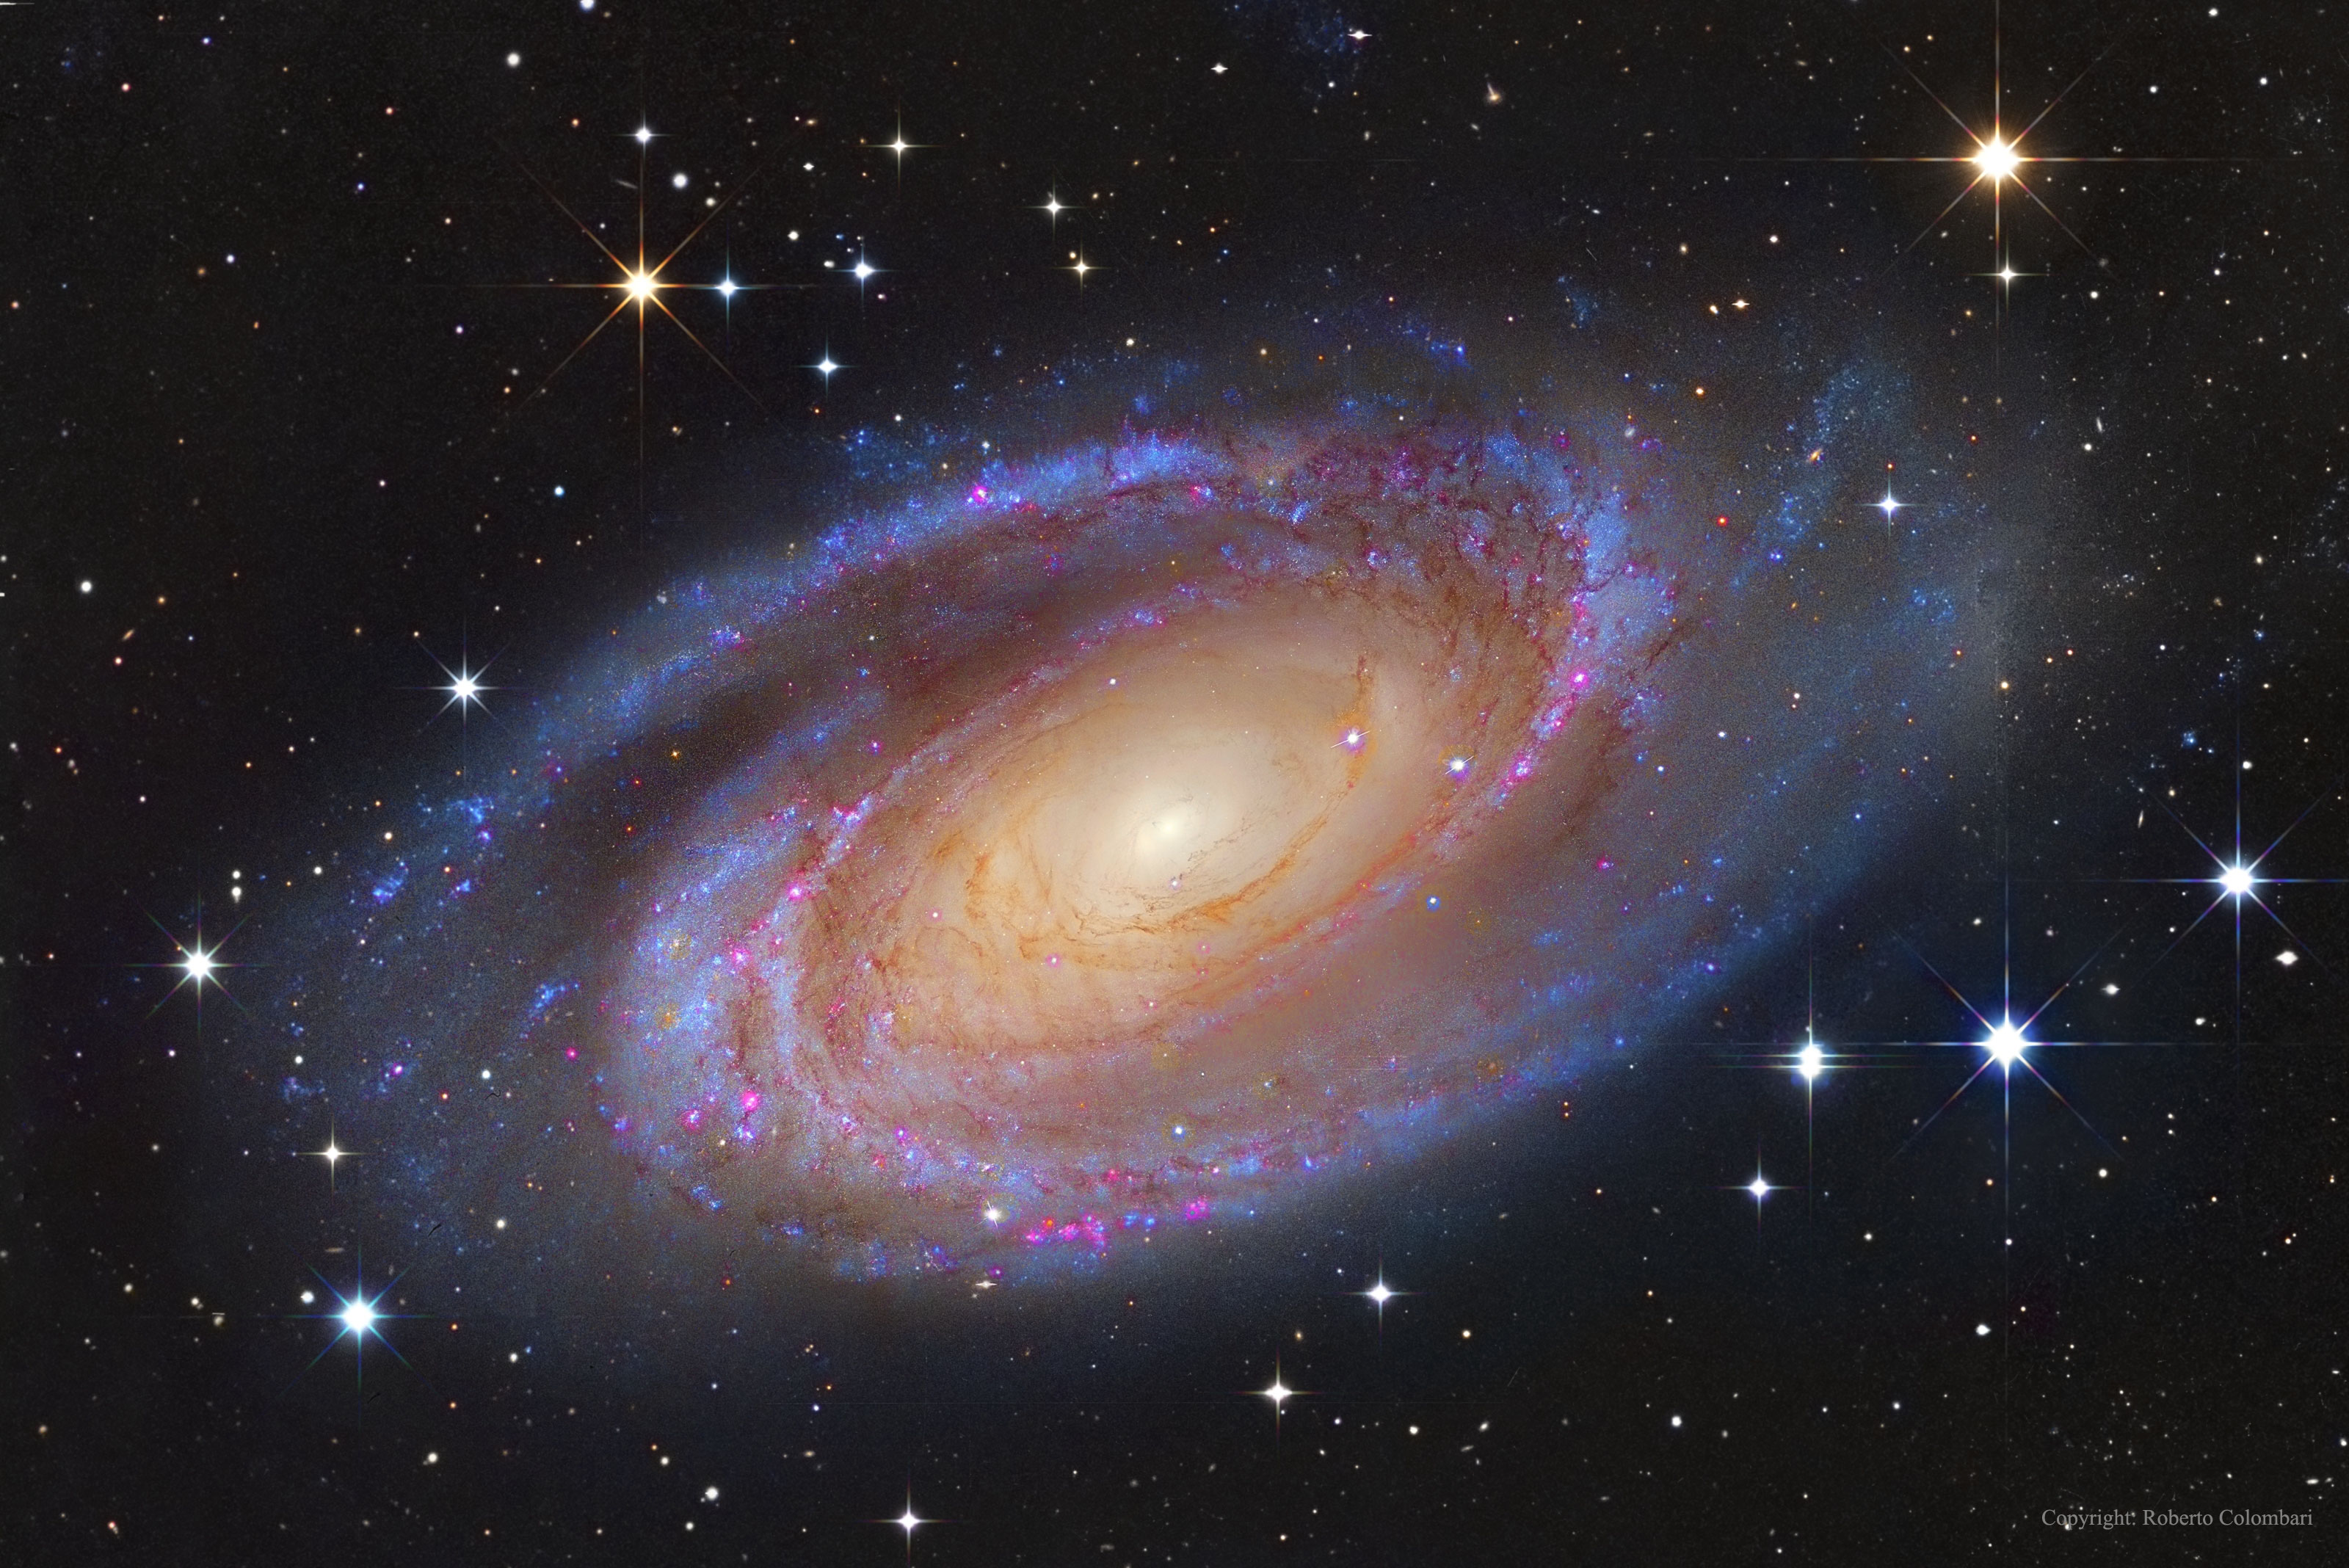 APOD: 2017 September 17 - Bright Spiral Galaxy M81